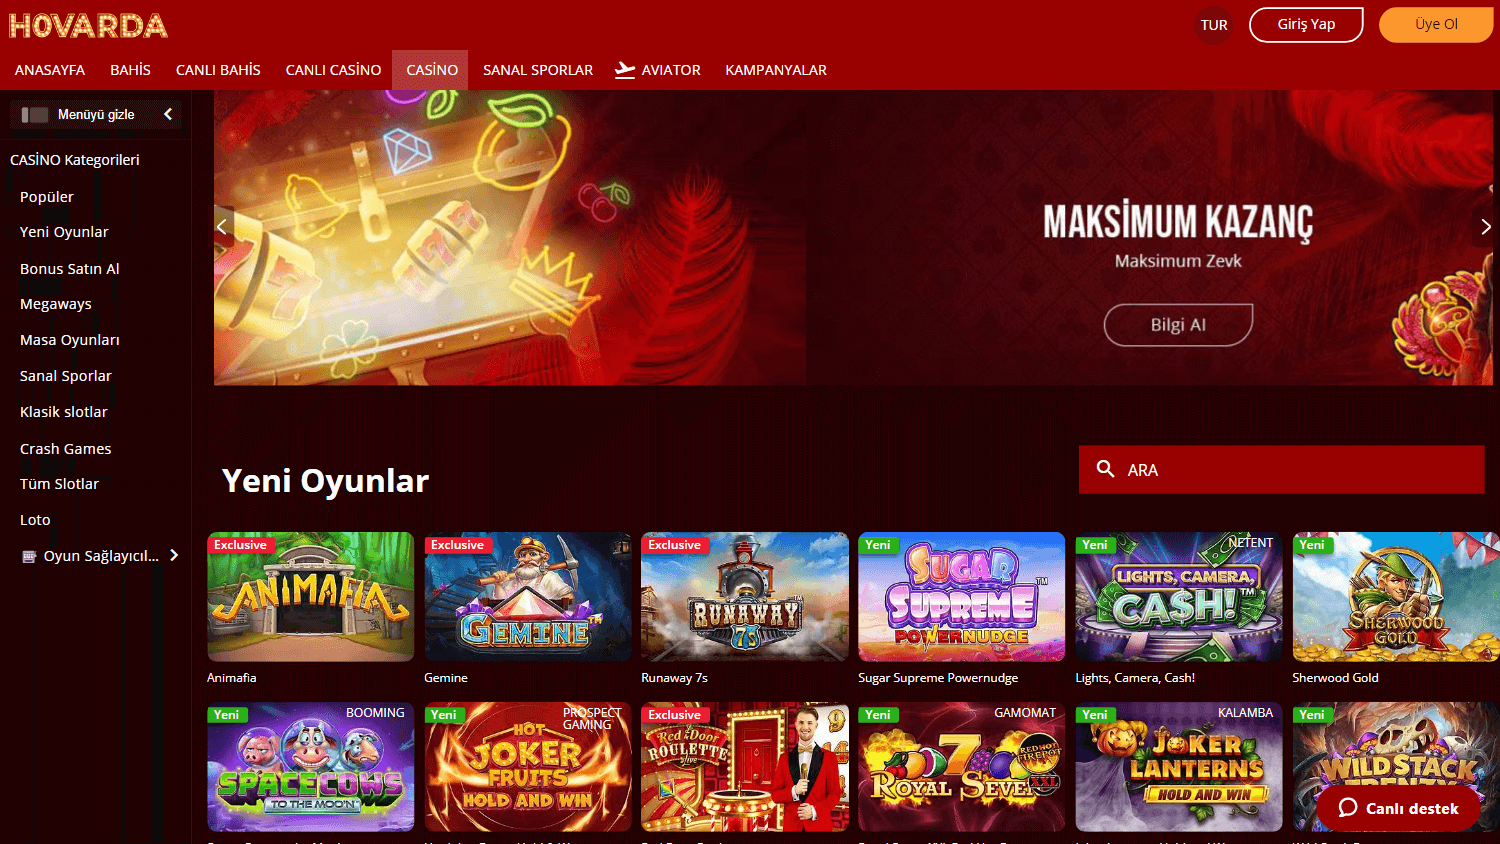 hovarda_casino_homepage_desktop